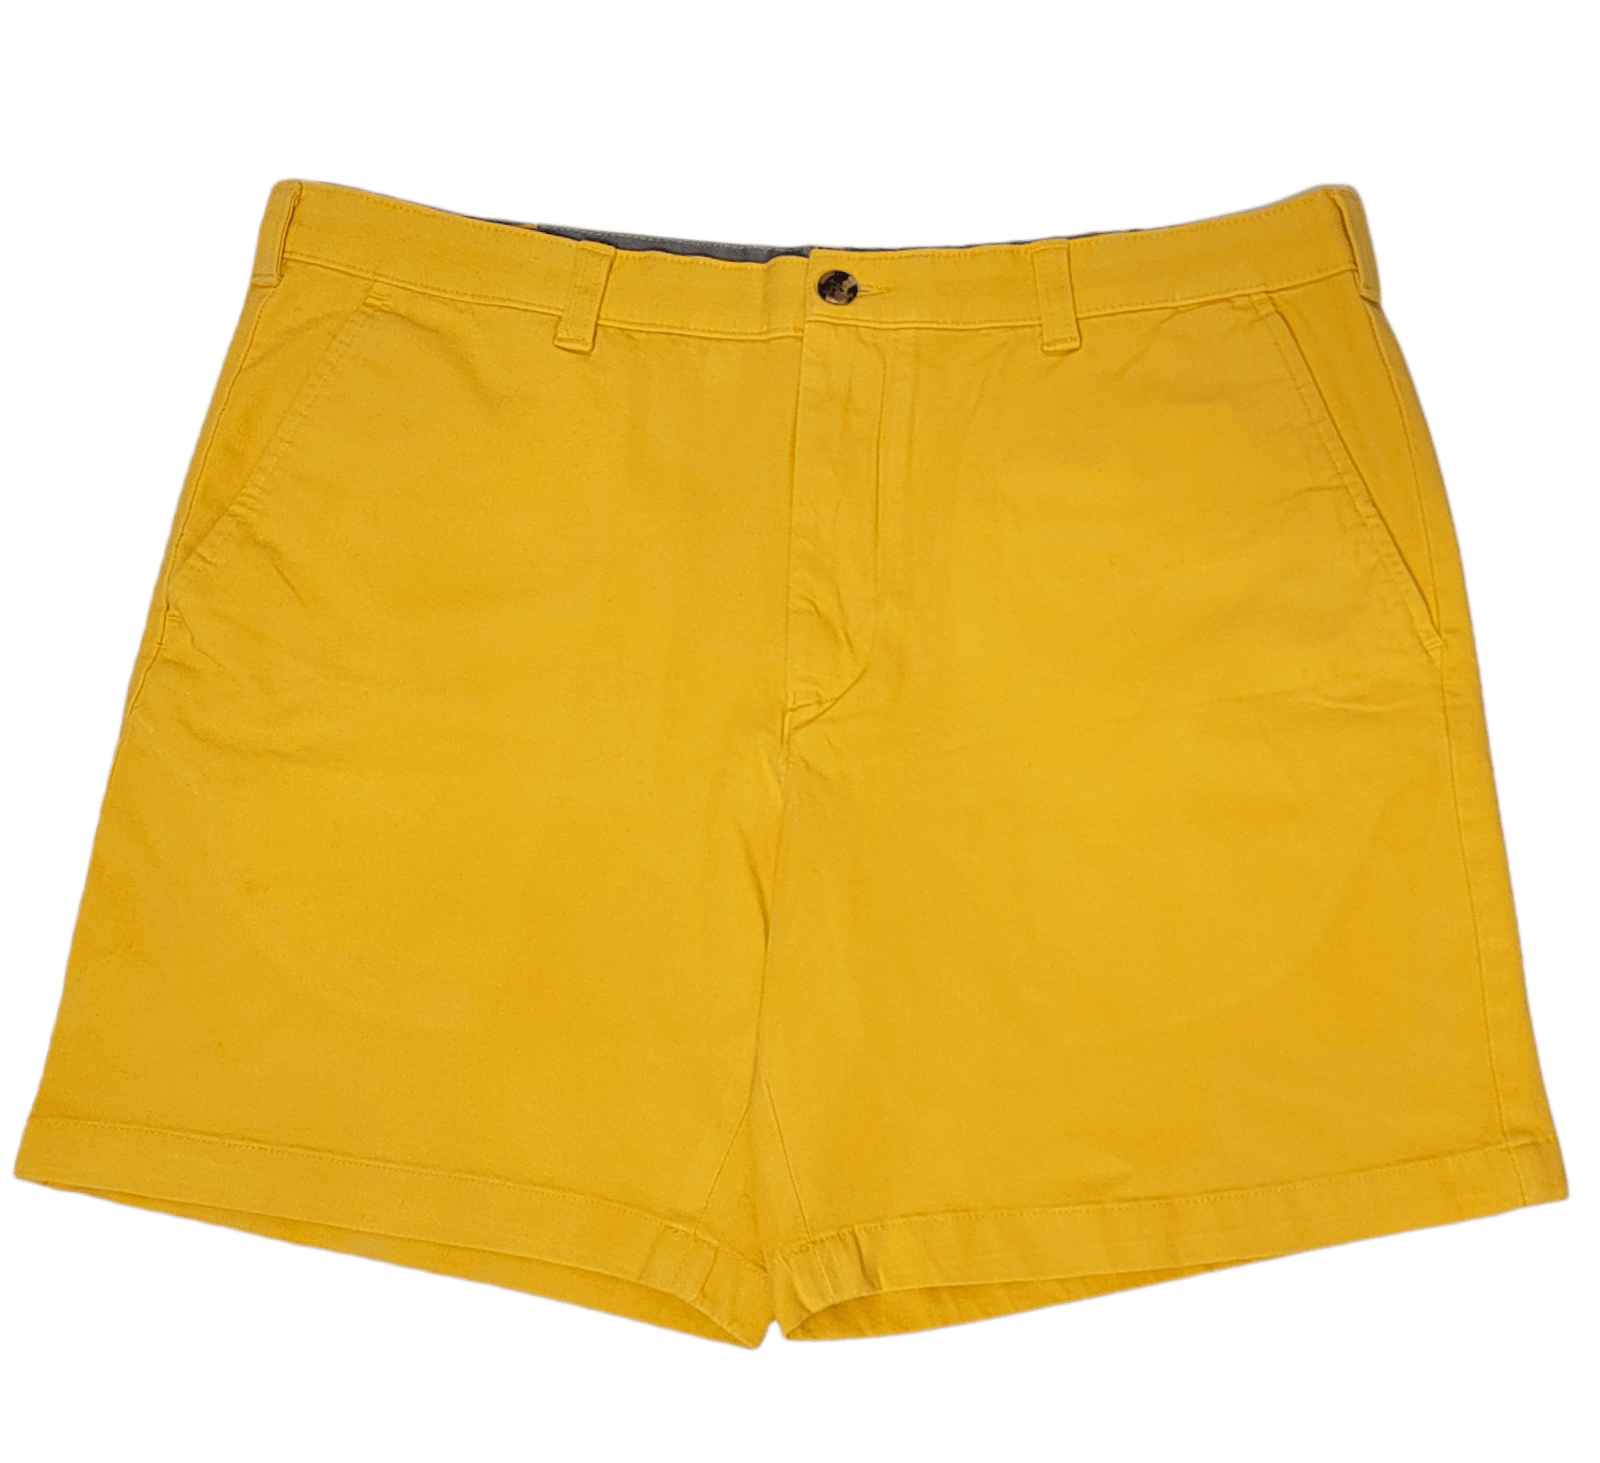 ElOutlet - Men Summer Men Shorts size 36 Men Shorts - Yellow